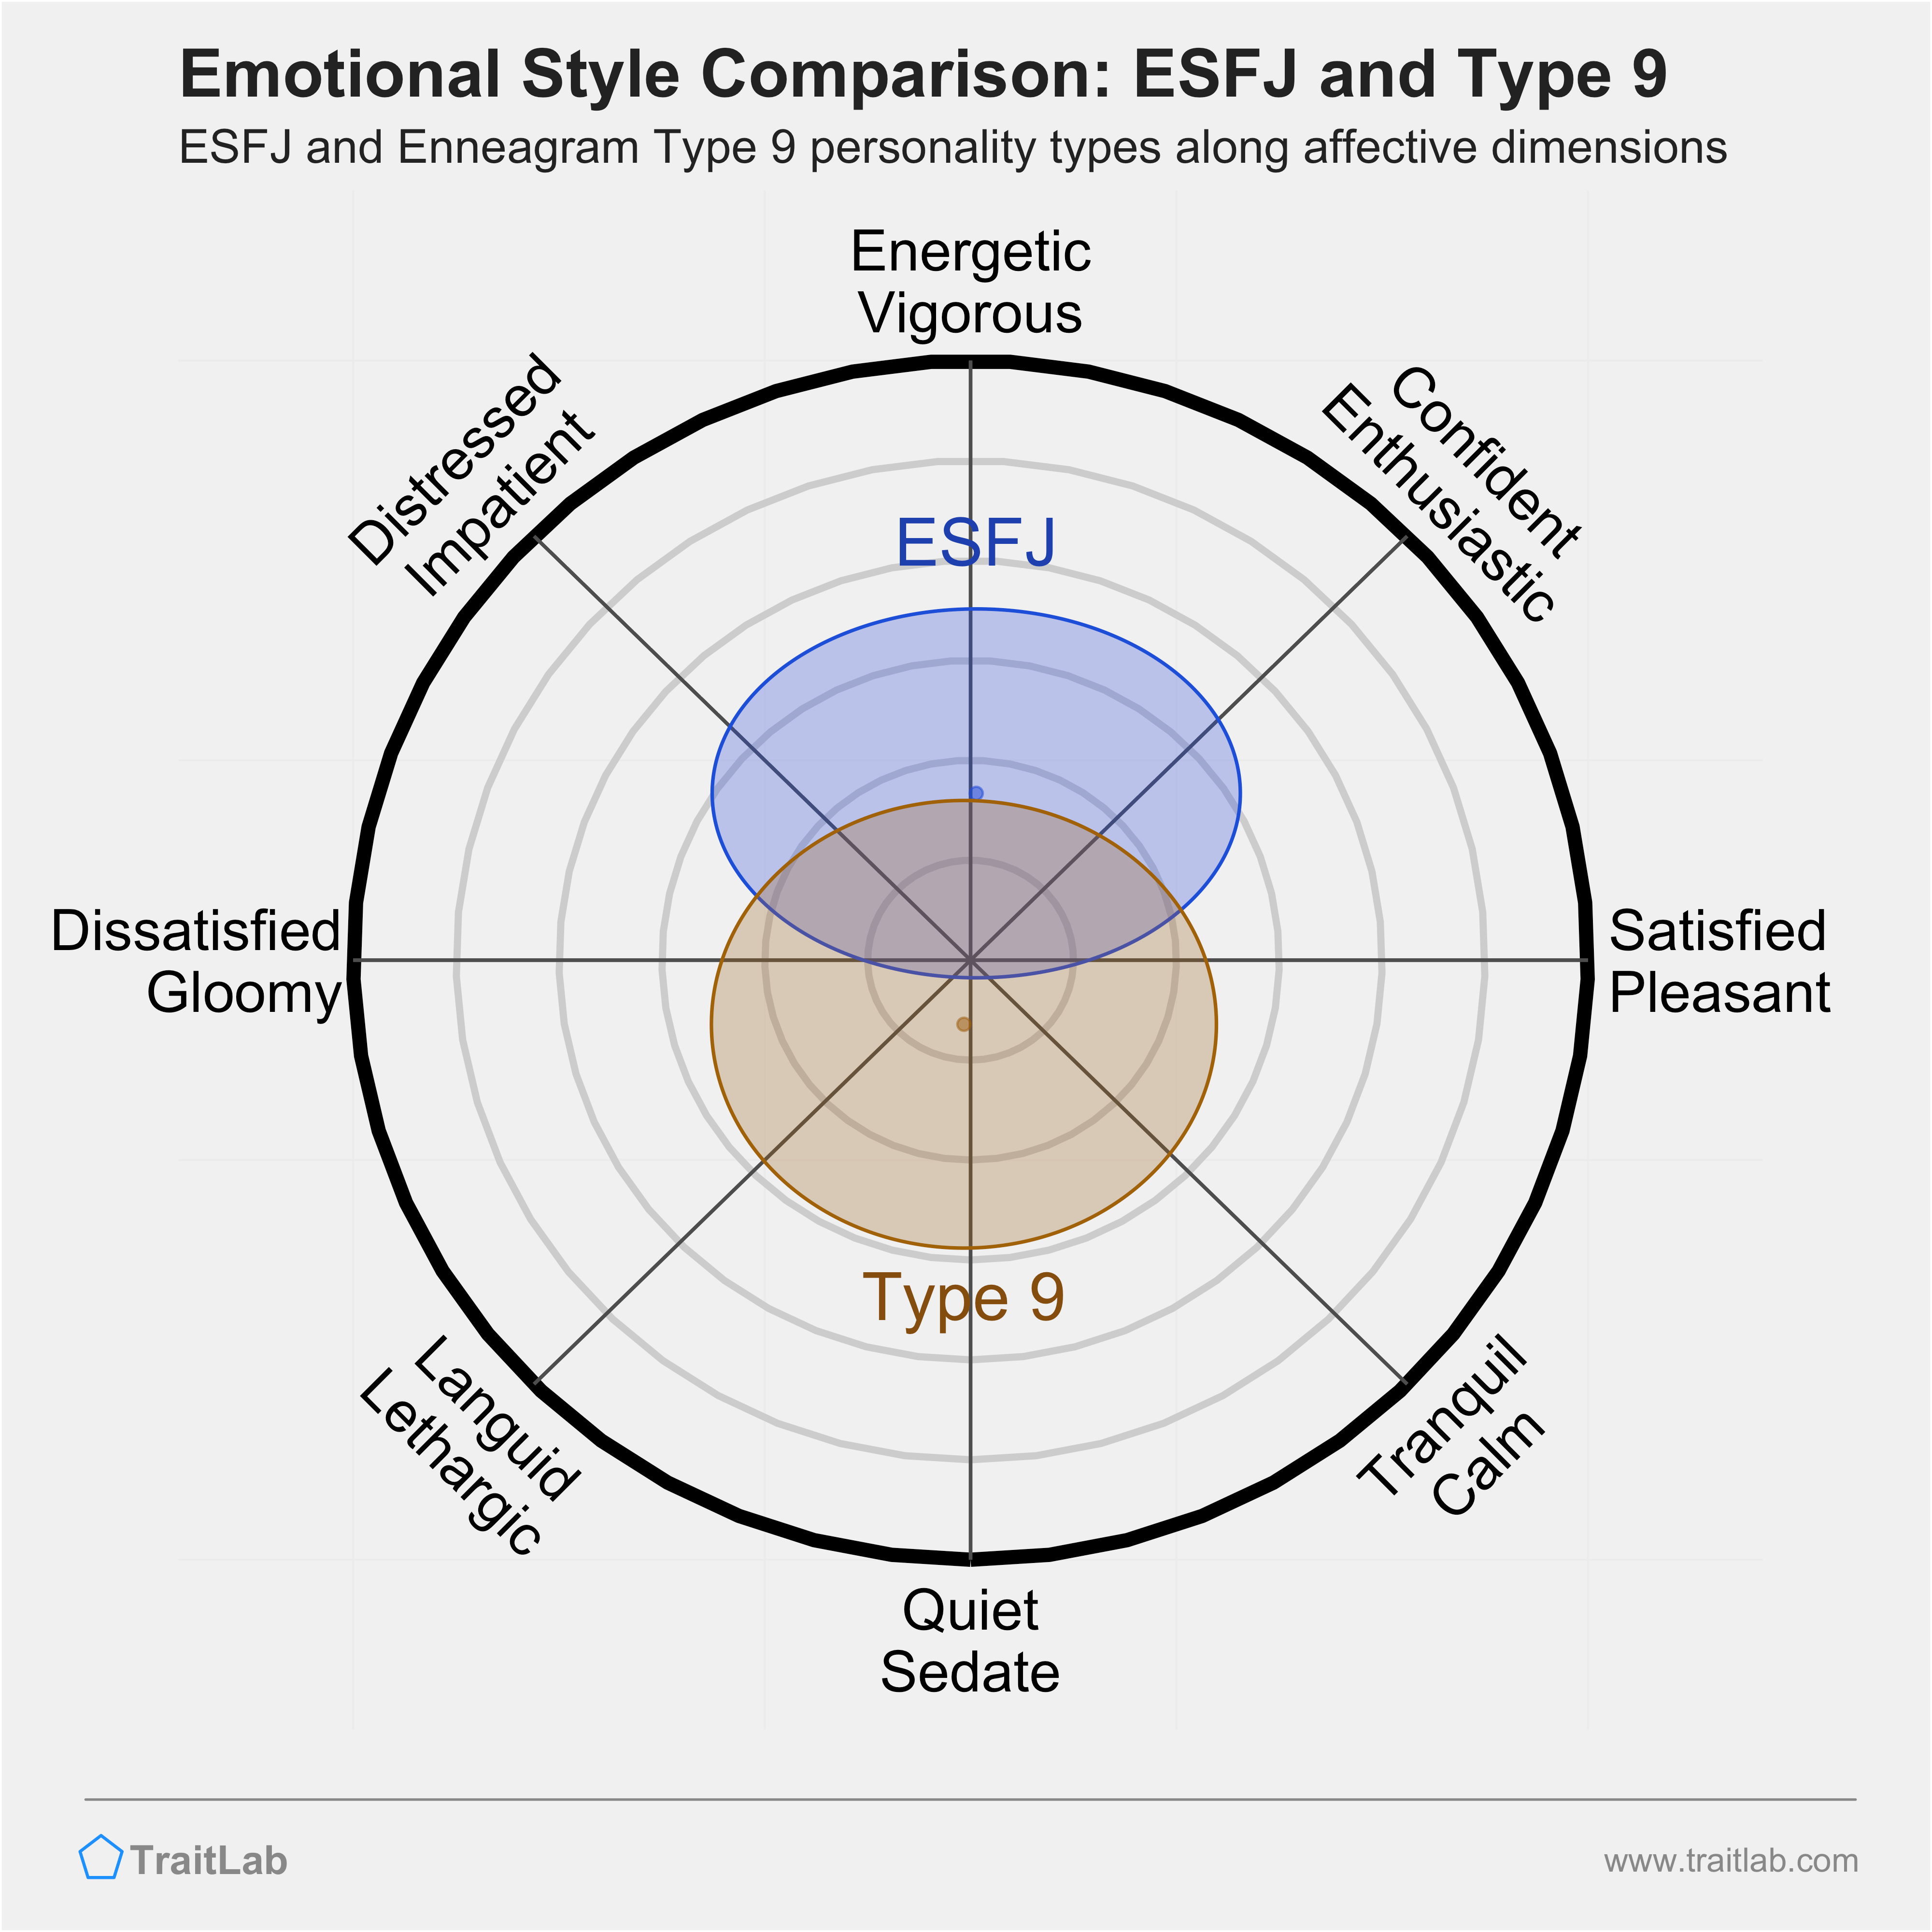 ESFJ and Type 9 comparison across emotional (affective) dimensions